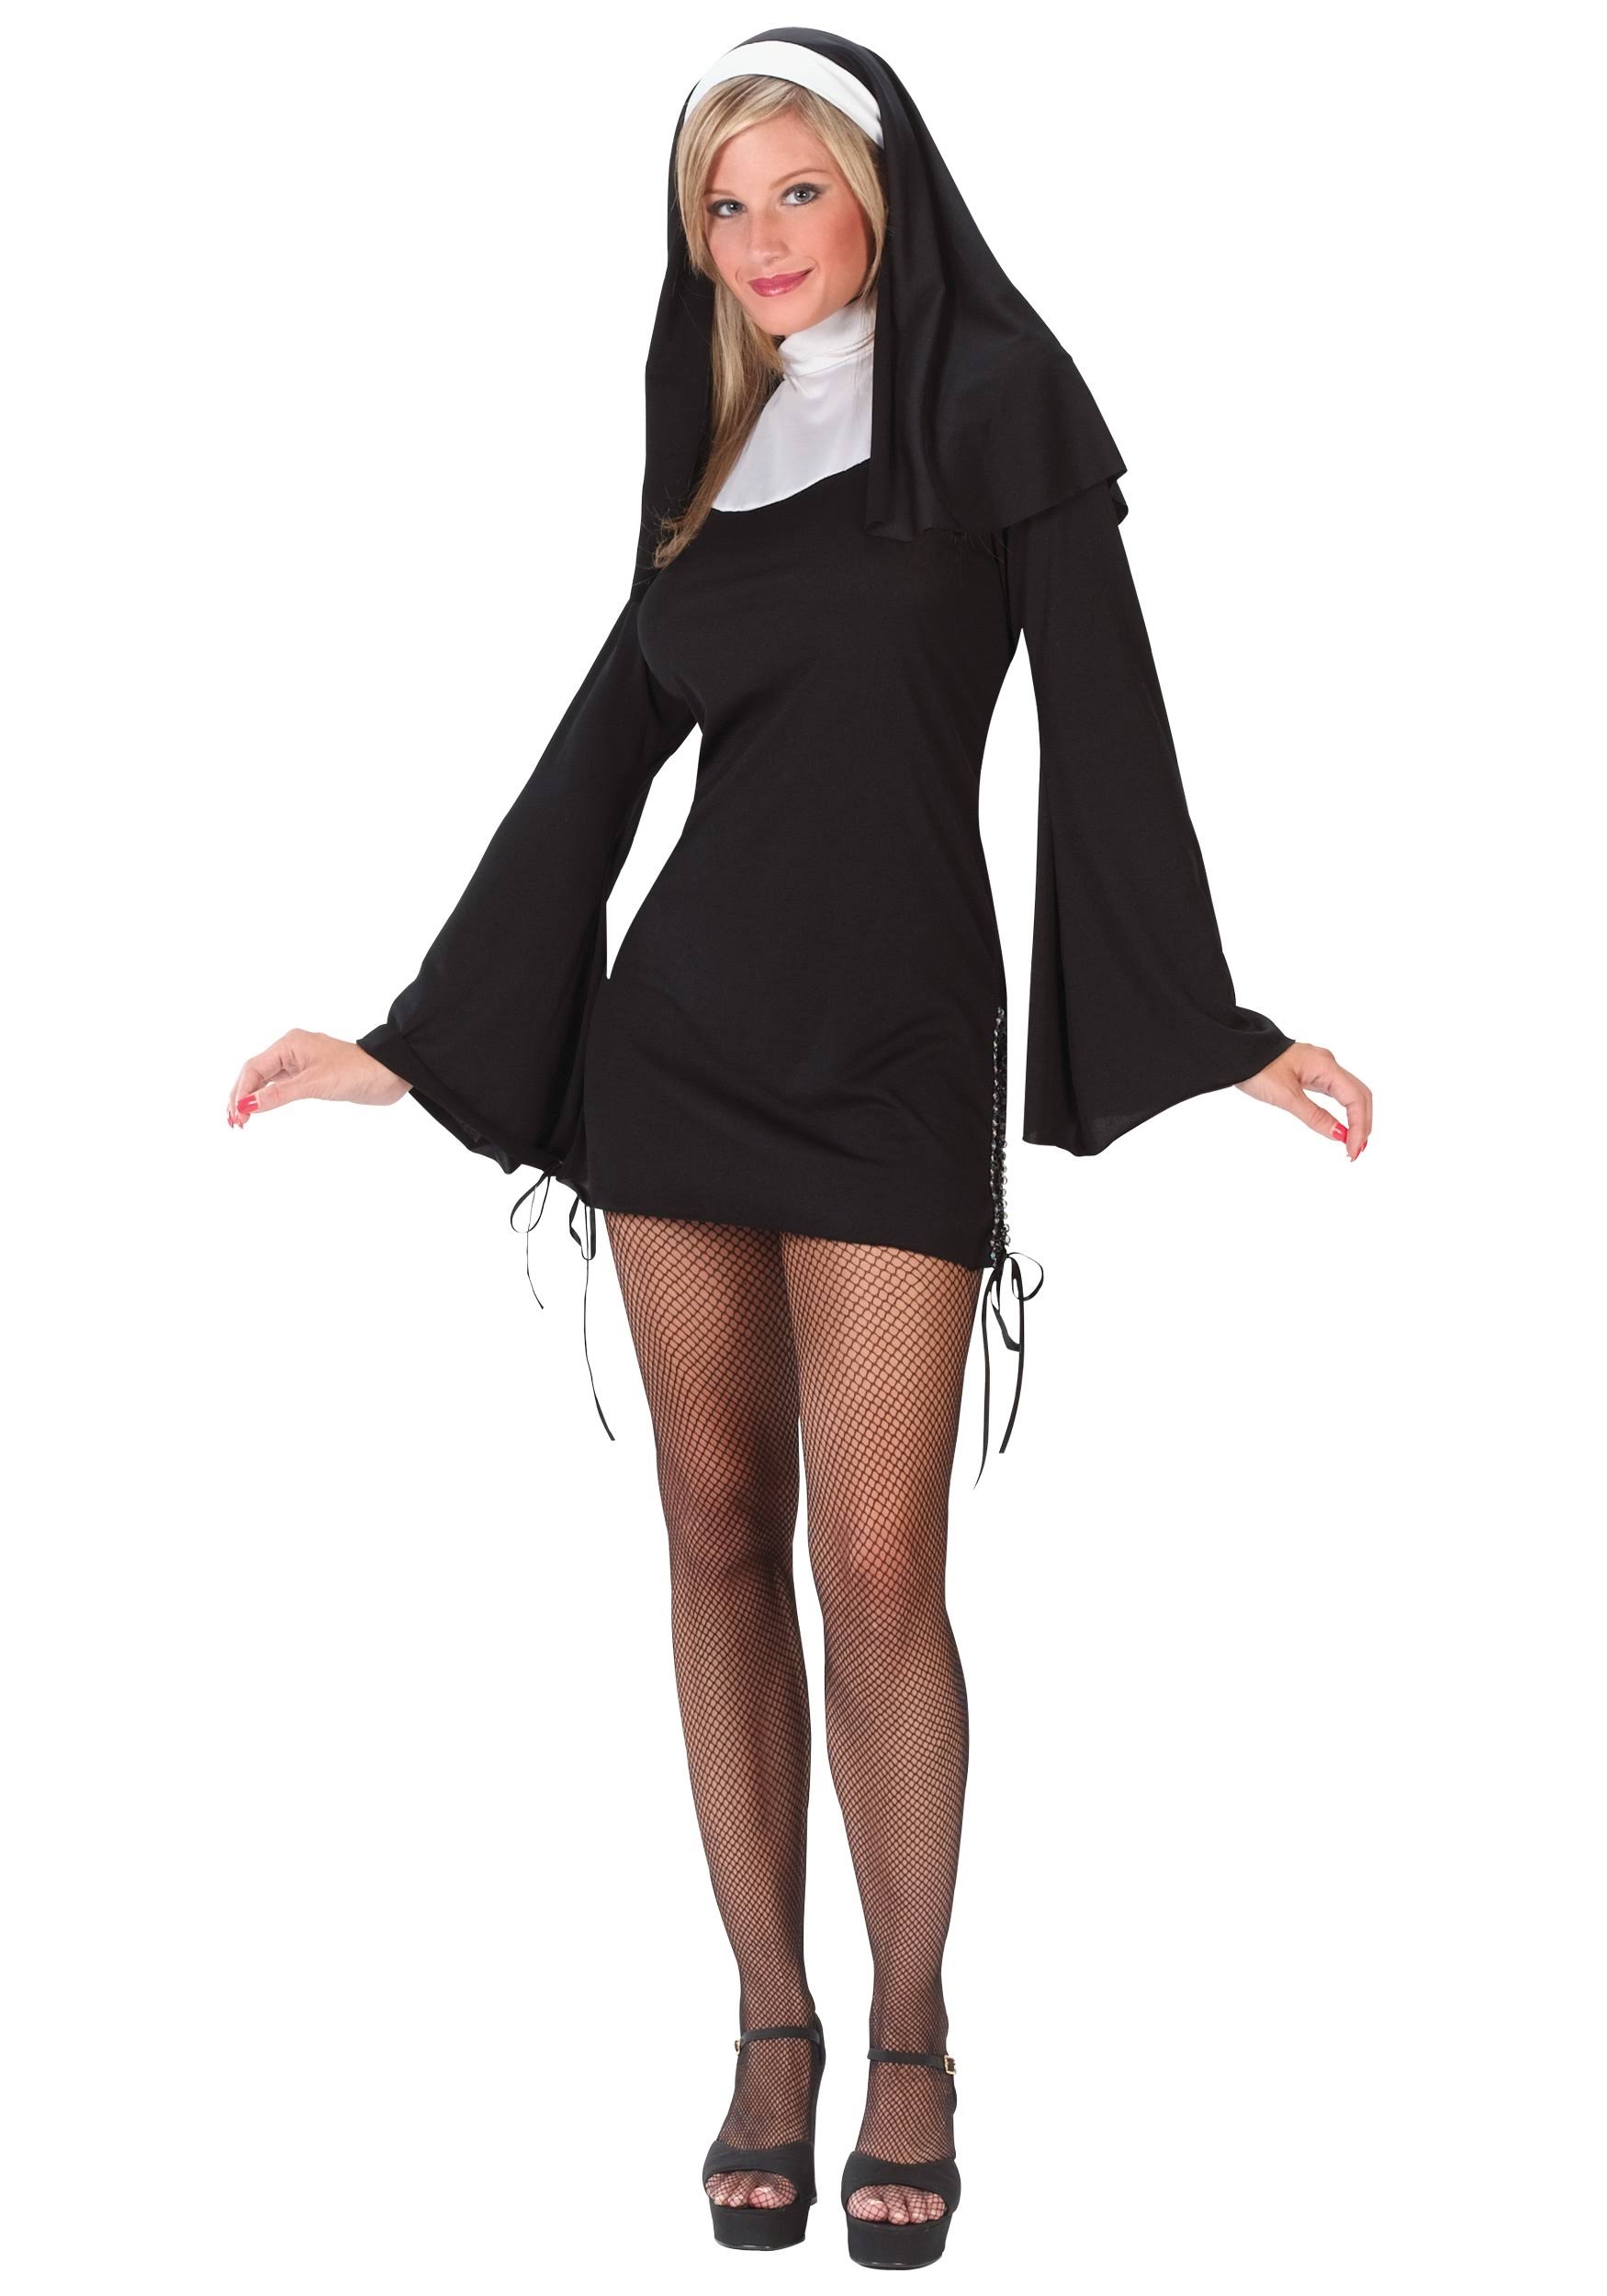 Nun Naughty Small Medium Costume